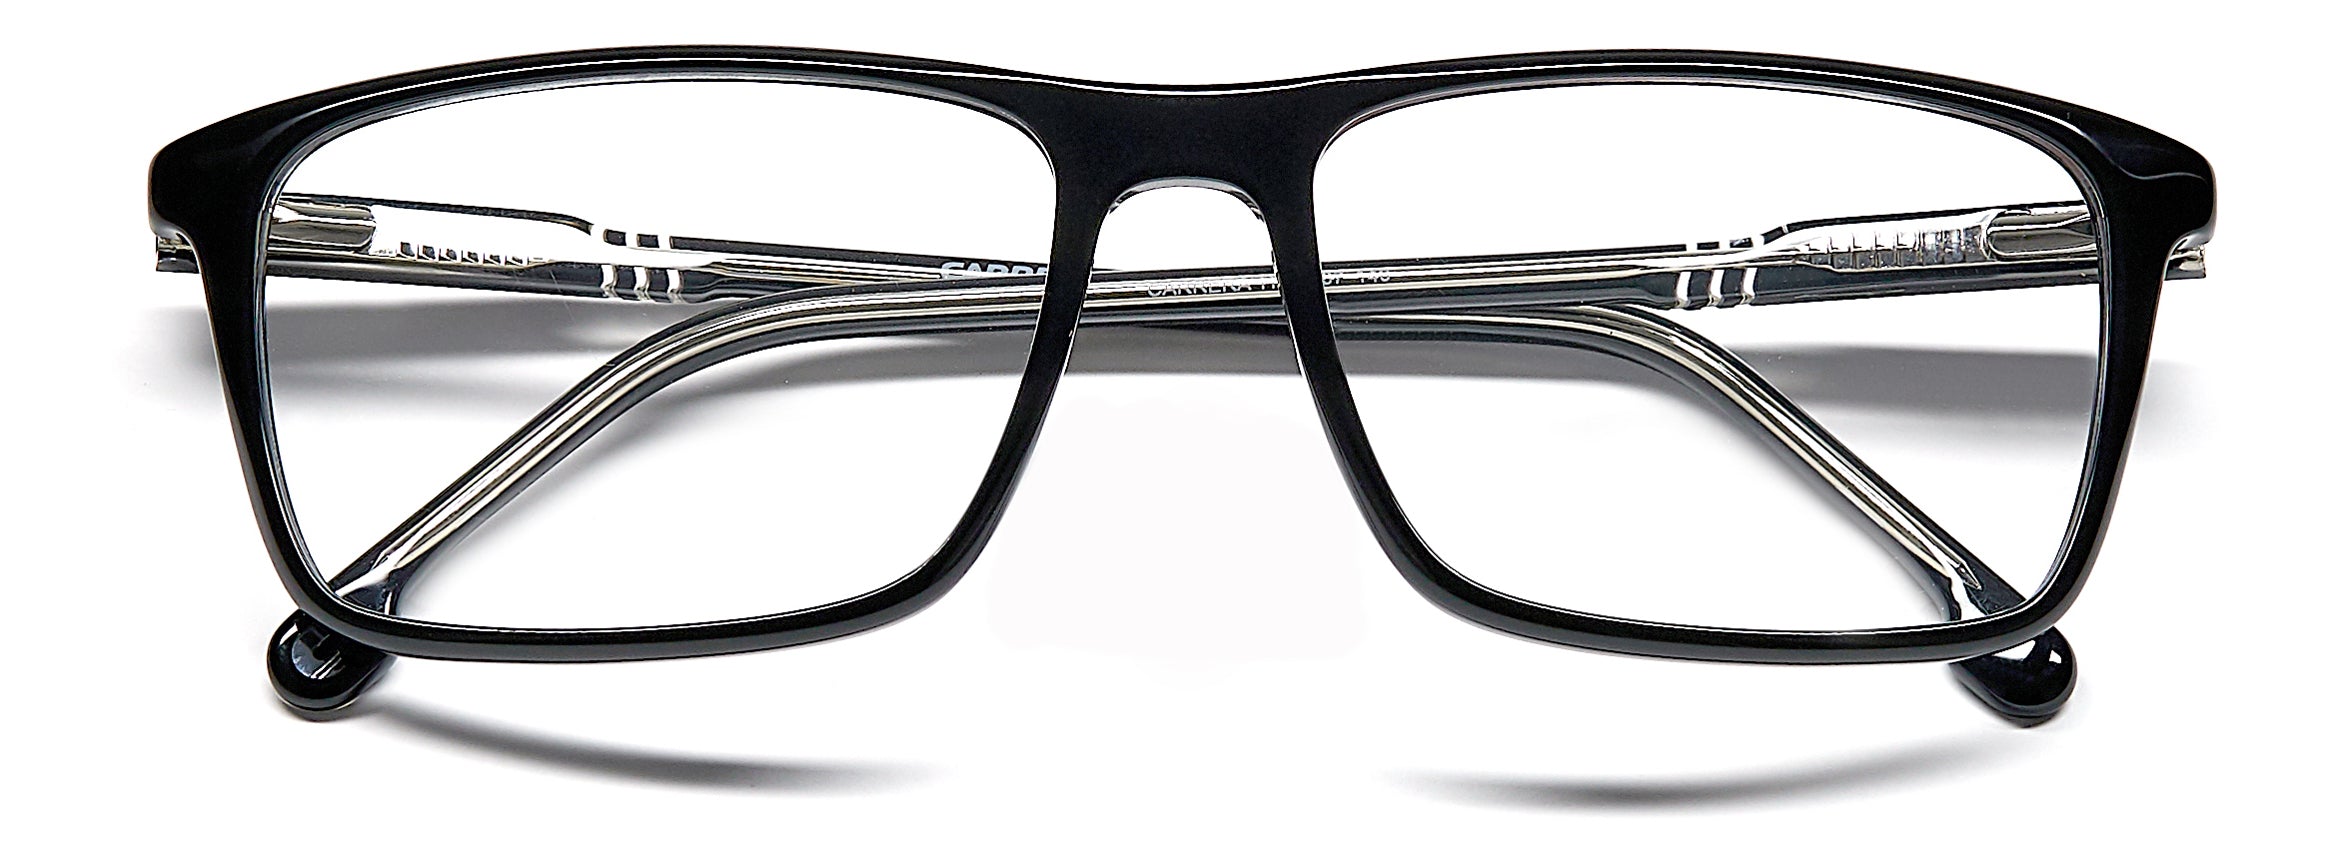 Sunglasses,specsmart, spec smart, glasses, eye glasses glasses frames, where to get glasses in lagos, eye treatment, wellness health care group, carrera 1128- black